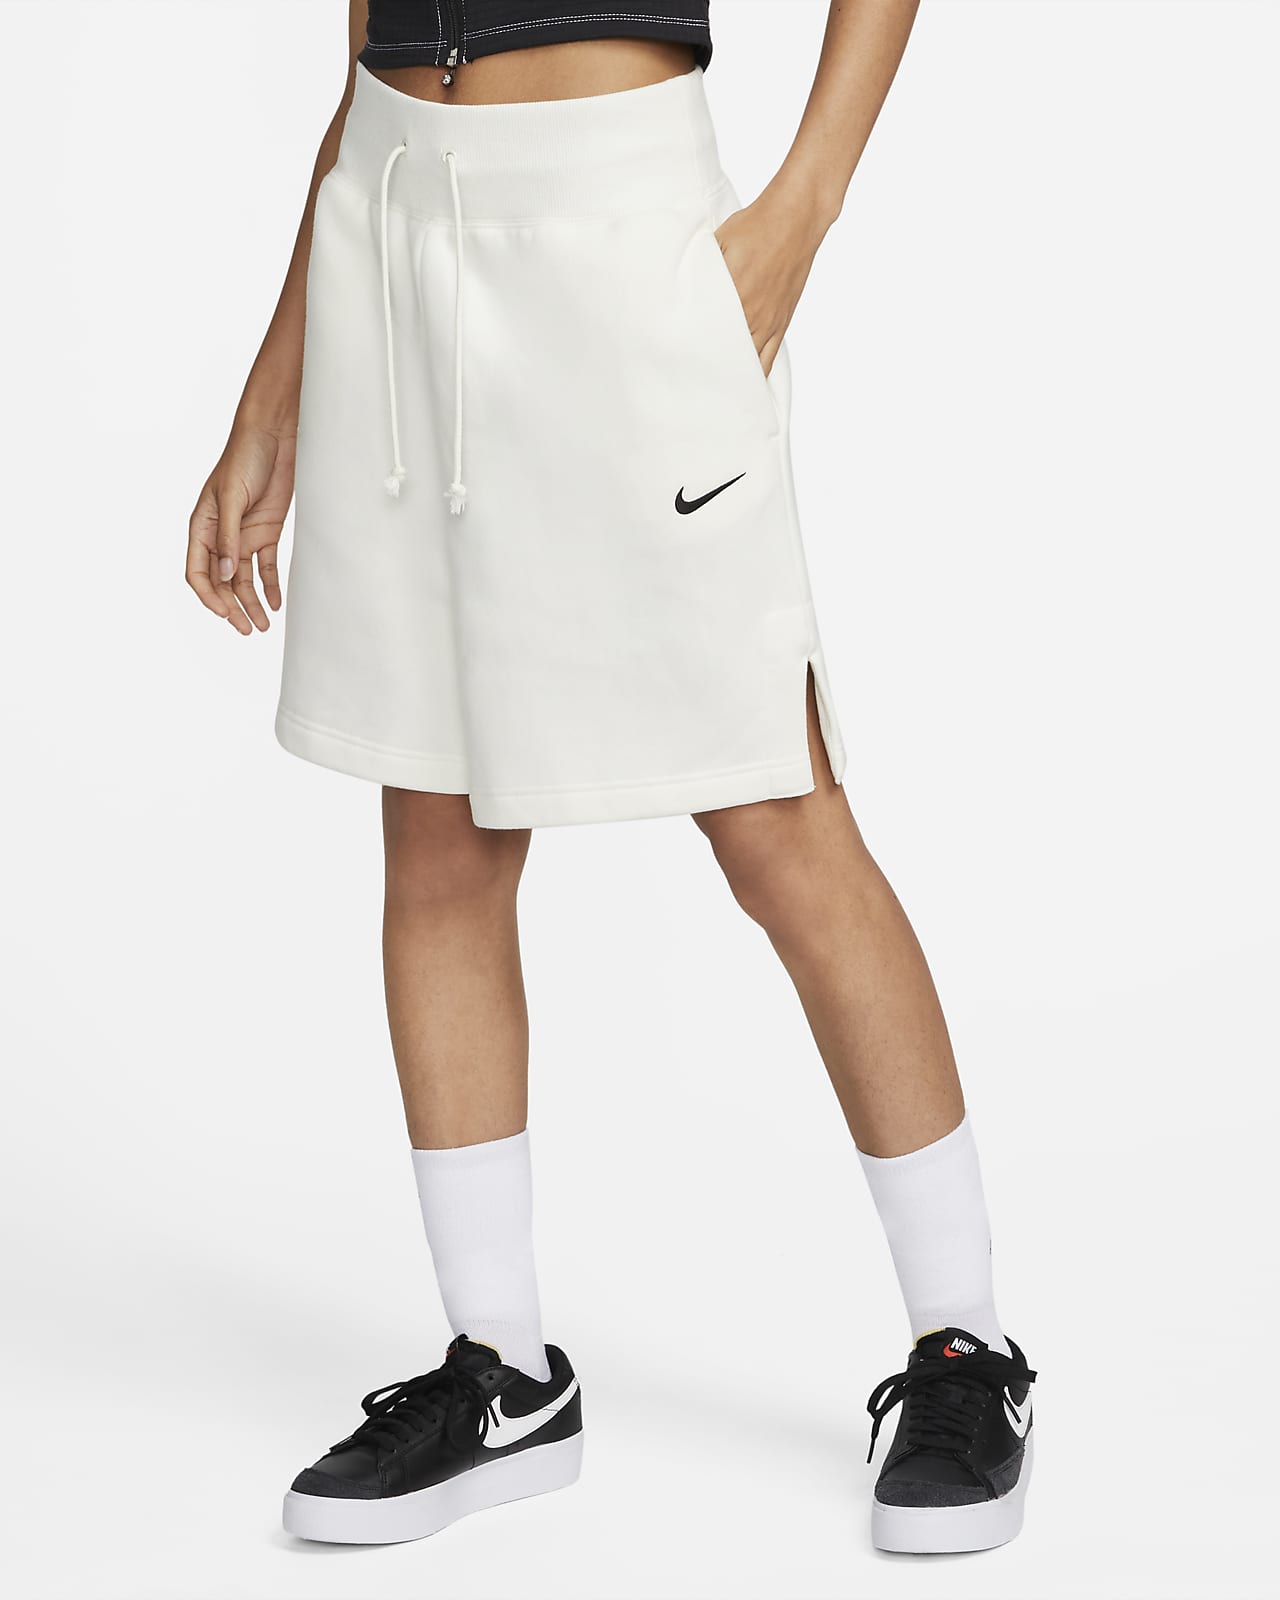 Nike Sportswear Phoenix Fleece magas derekú, laza fazonú női rövidnadrág